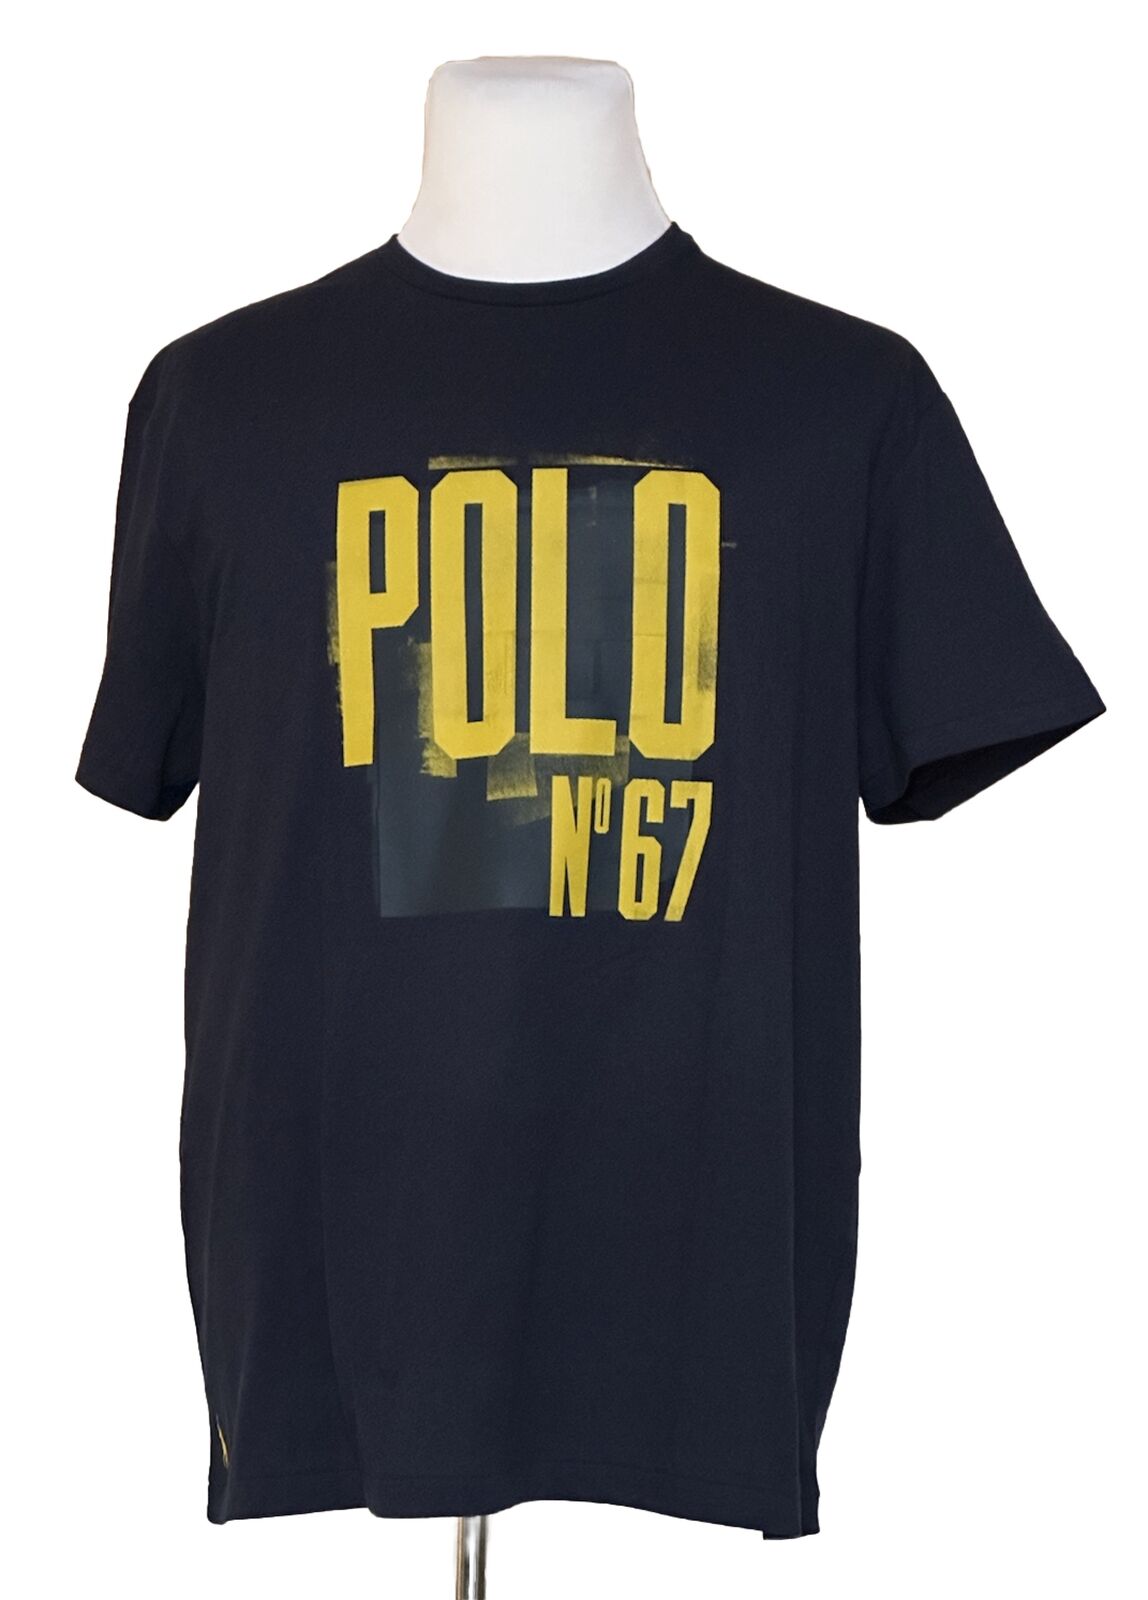 NWT Polo Ralph Lauren POLO 67 Men's Blue Short Sleeve T-Shirt Top Large